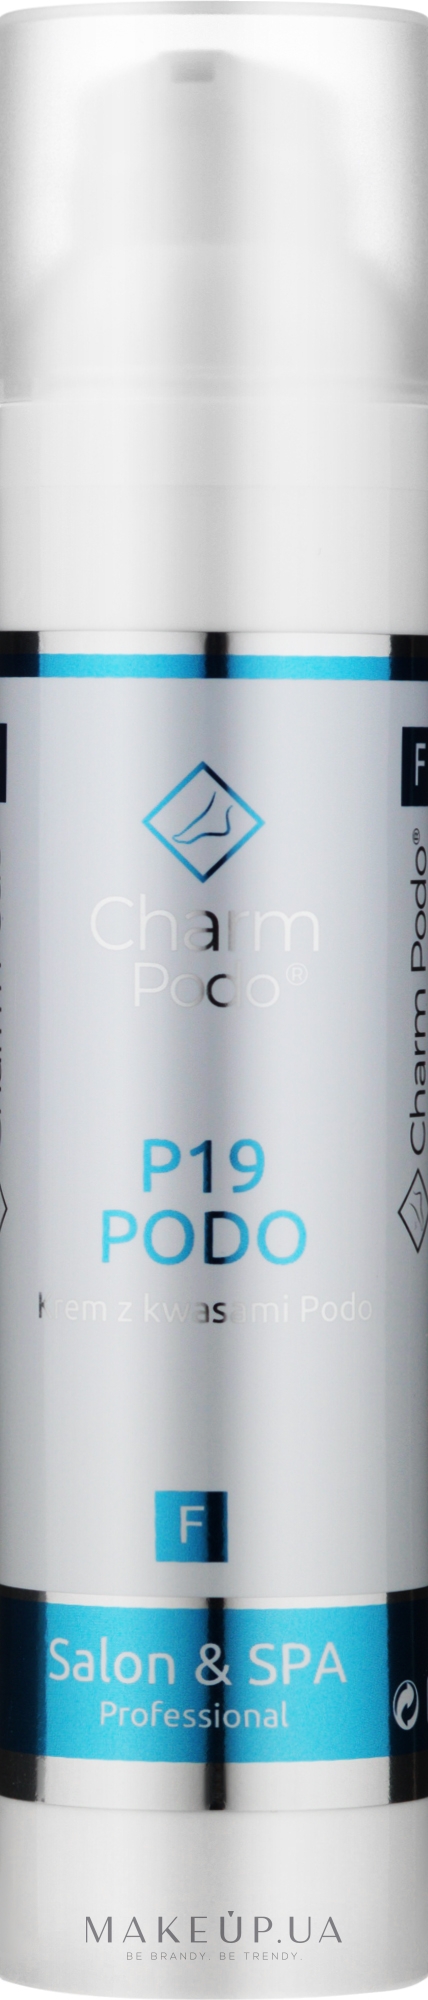 Крем для ног с кислотами - Charmine Rose Charm Podo P19 — фото 100ml